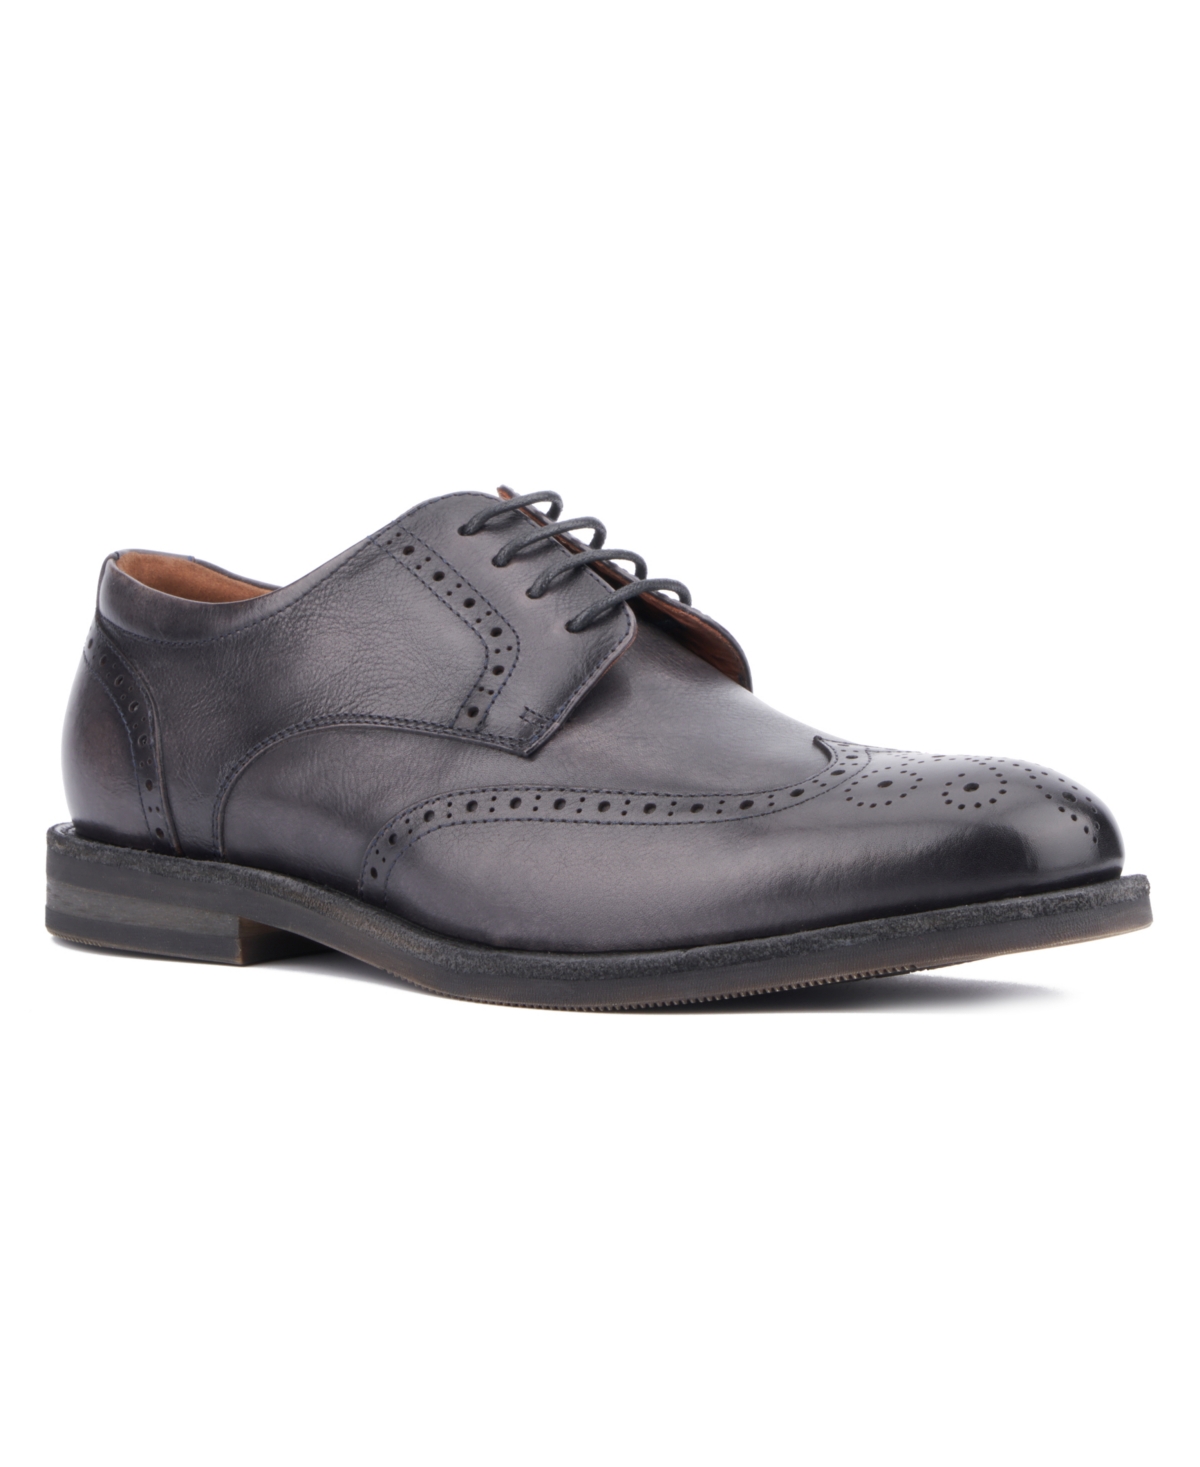 Vintage Foundry Co Men's Irwin Dress Oxford Shoes In Dark Gray